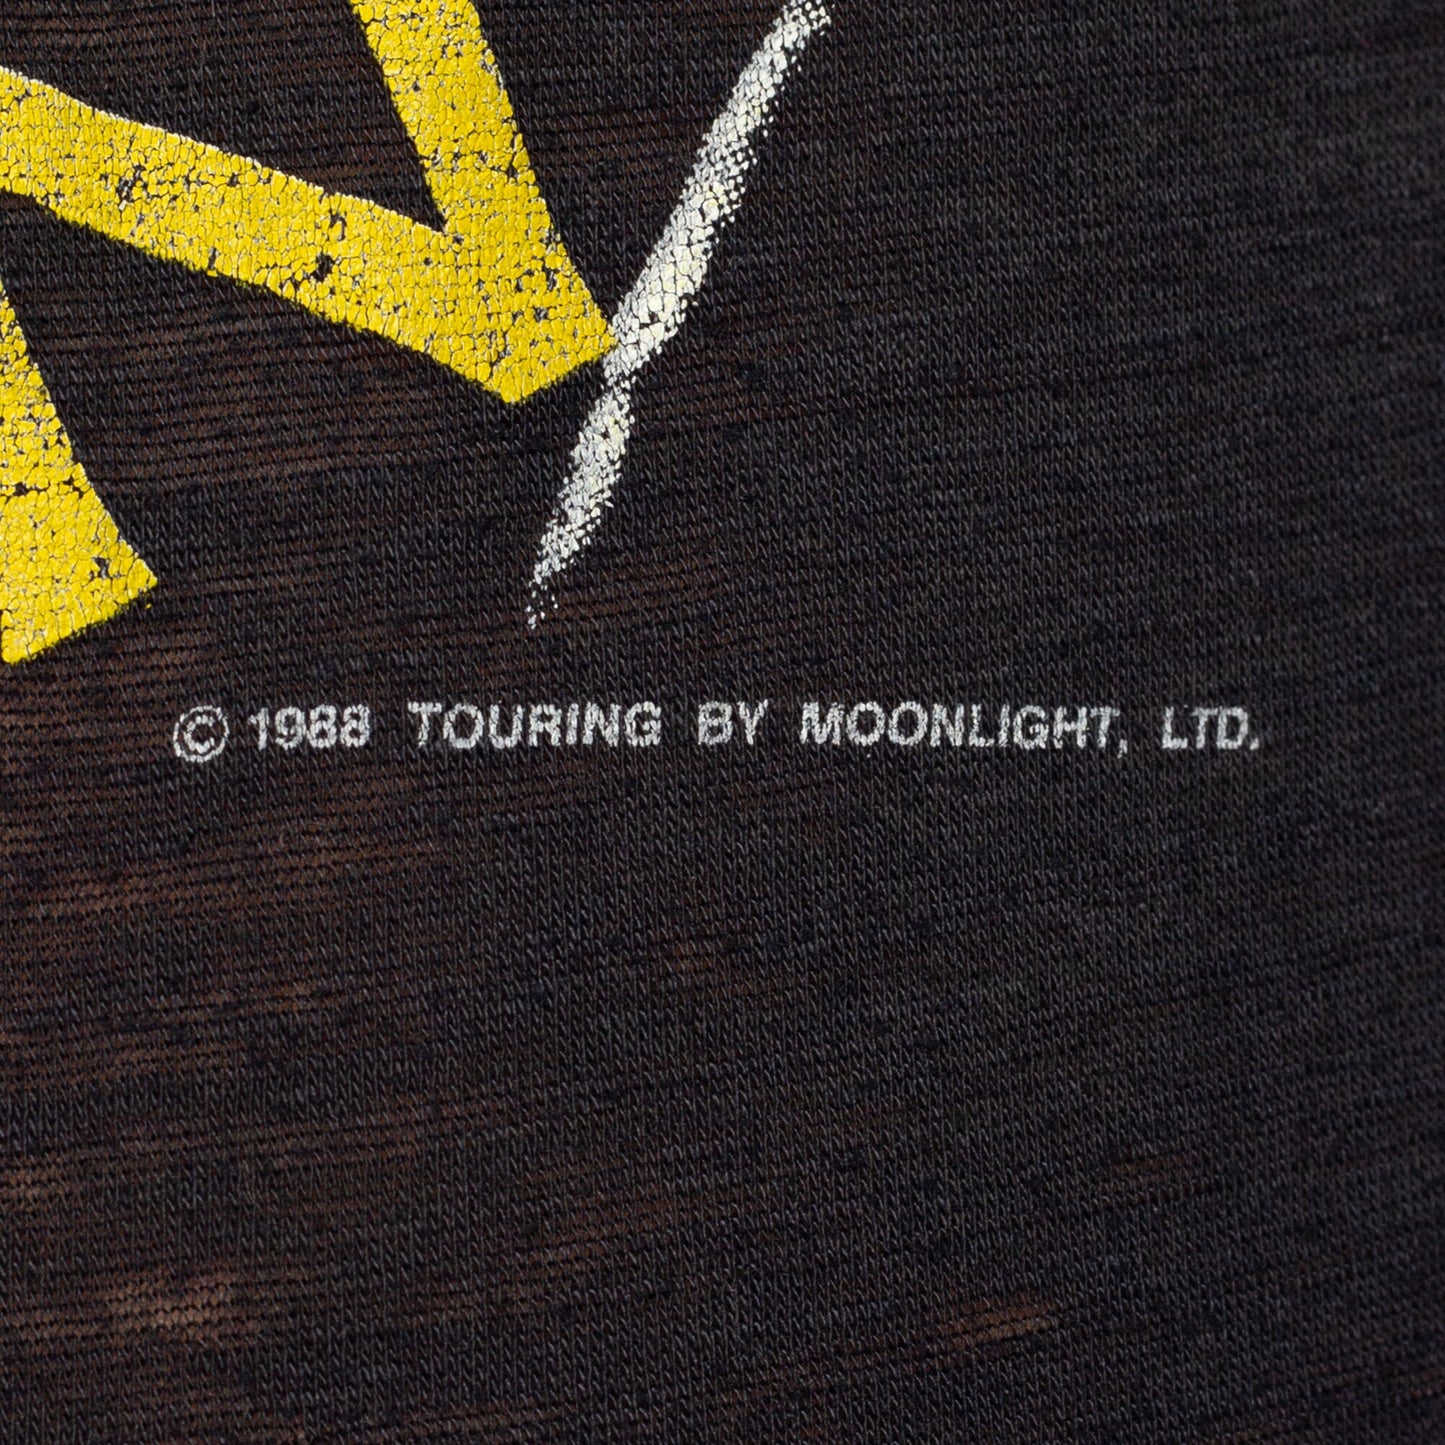 Medium Vintage 80s Robert Plant Tour T Shirt | 1986 Rare Graphic Collectible Rock Band Tee